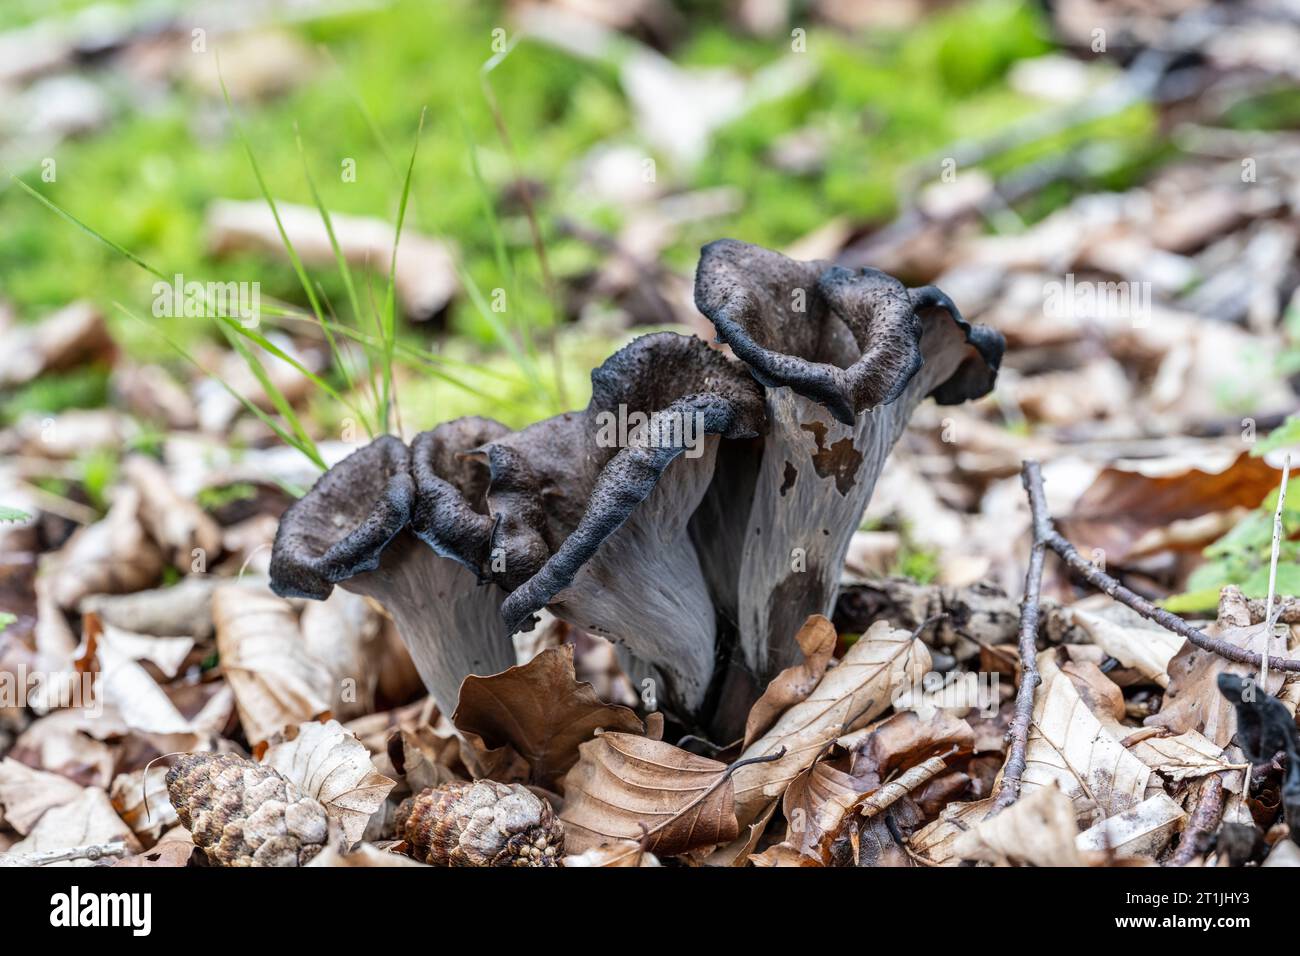 Horn of Plenty, Craterellus cornucopioides, growing in a Wensleydale woodland under Beech trees, Fagus sylvatica Stock Photo